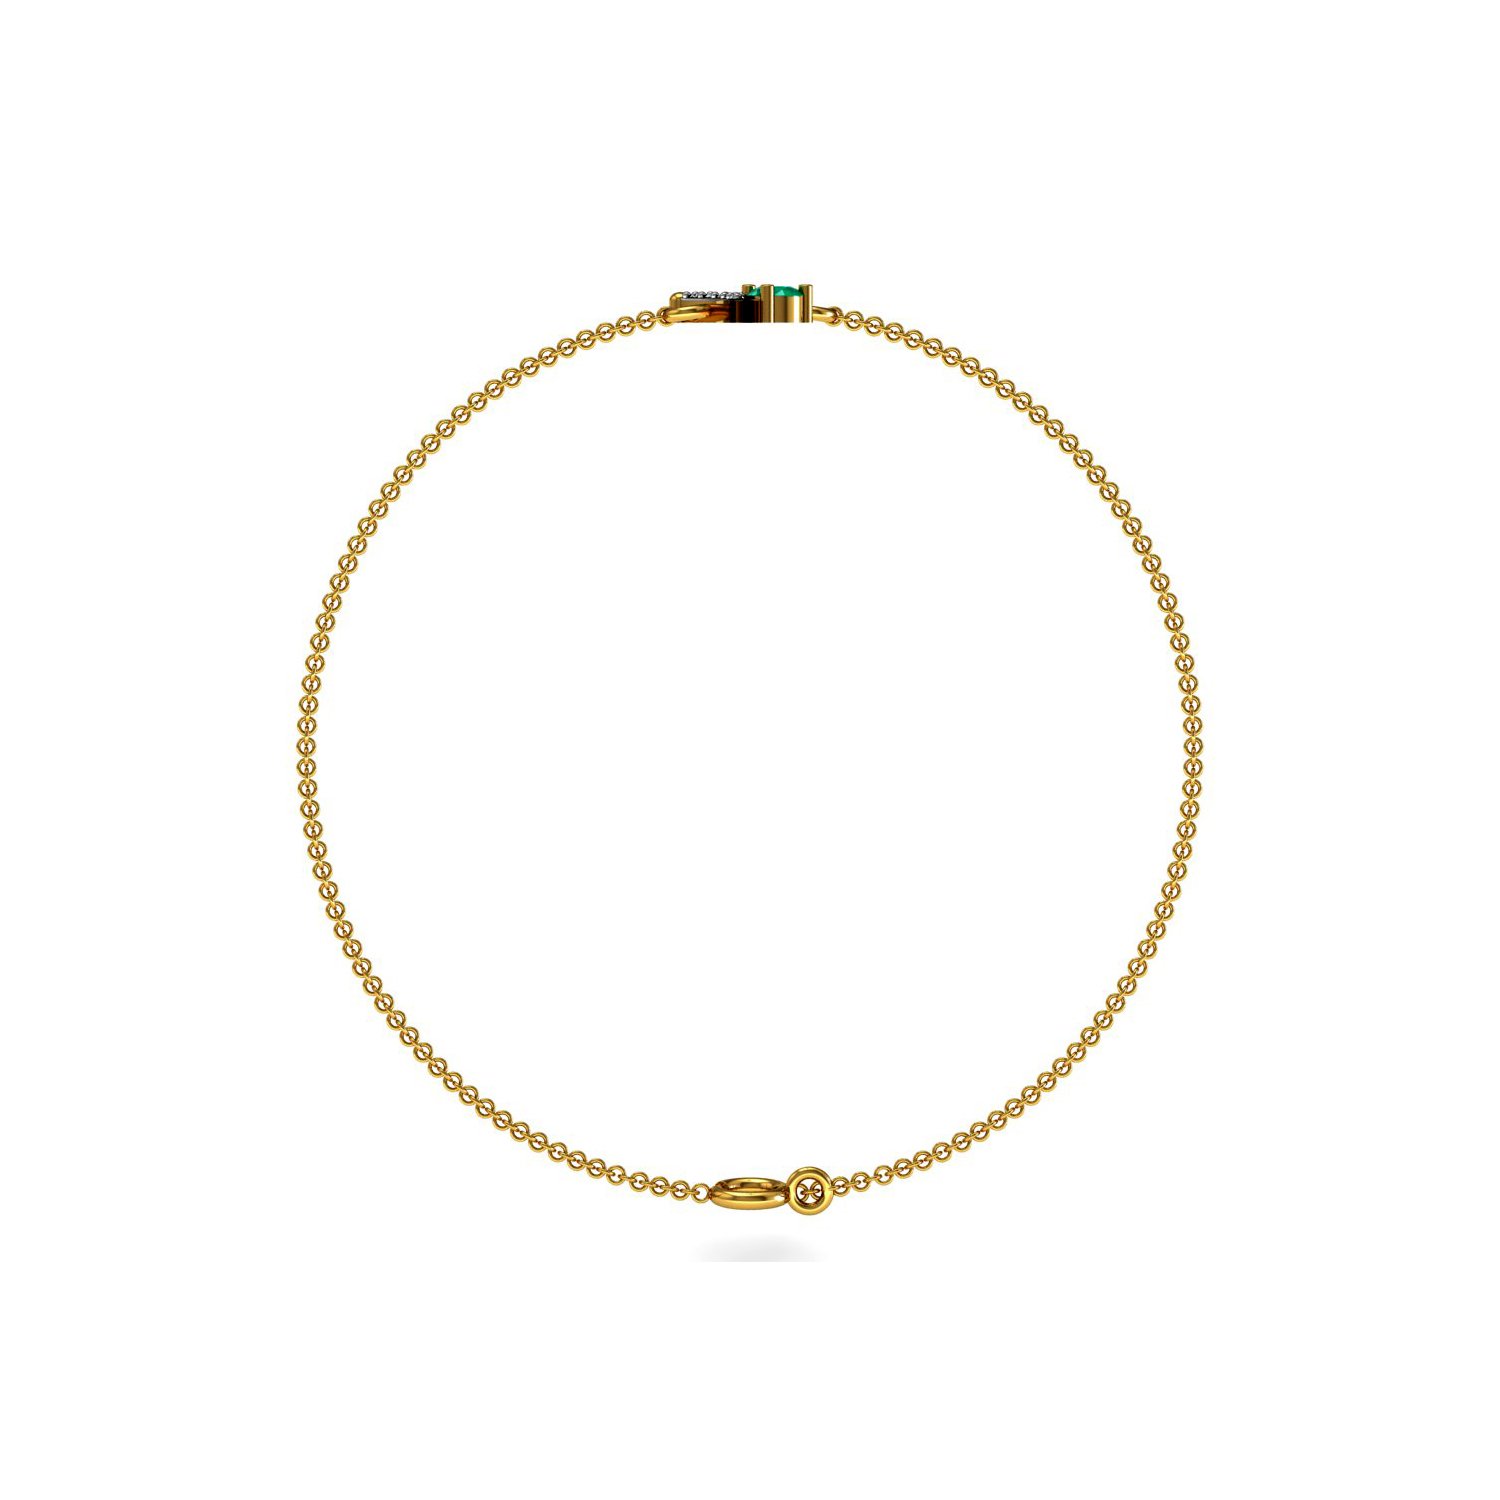 Solid gold emerald diamond chain bracelet